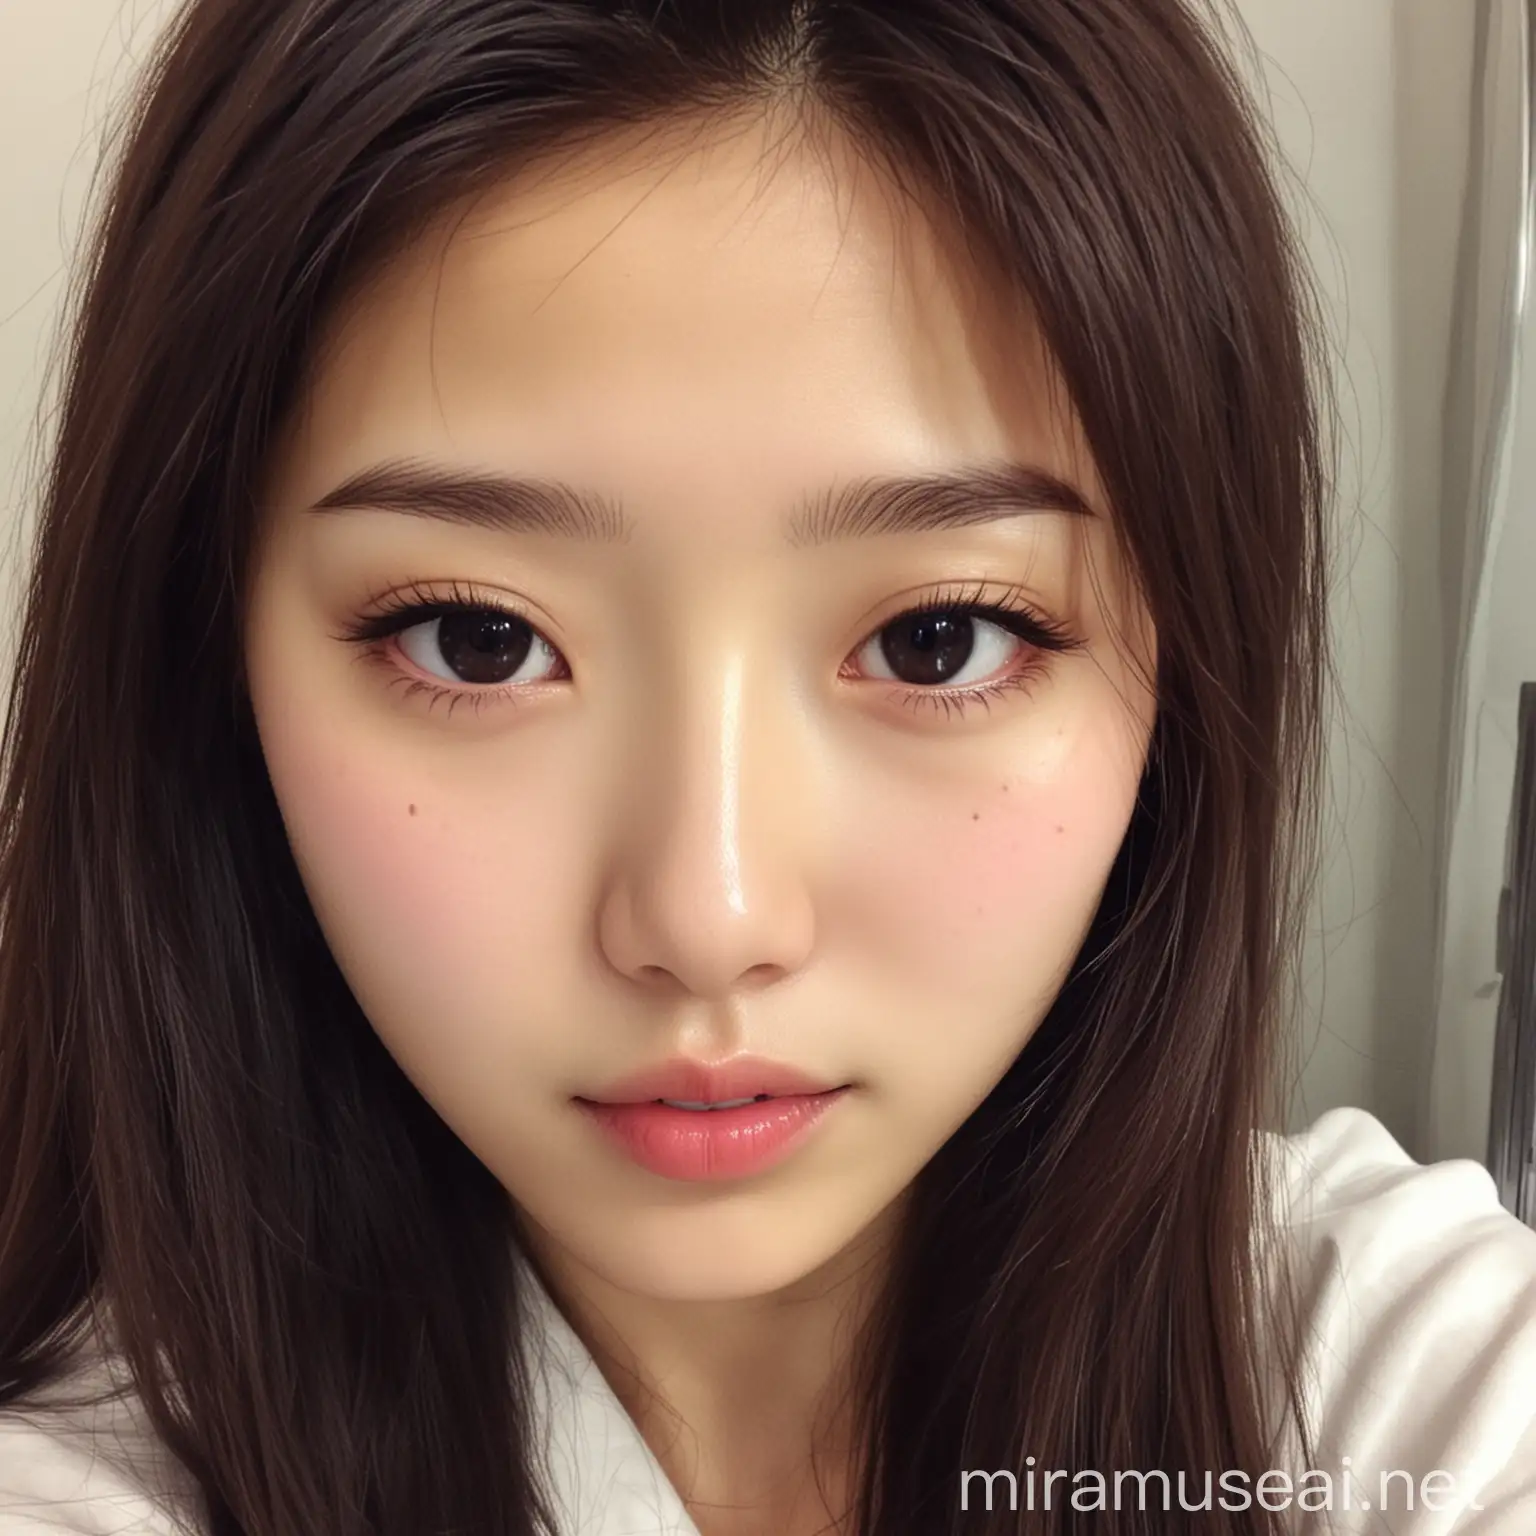 Stylish Korean Girl Taking a Selfie Modern Beauty Captured in a Snapshot